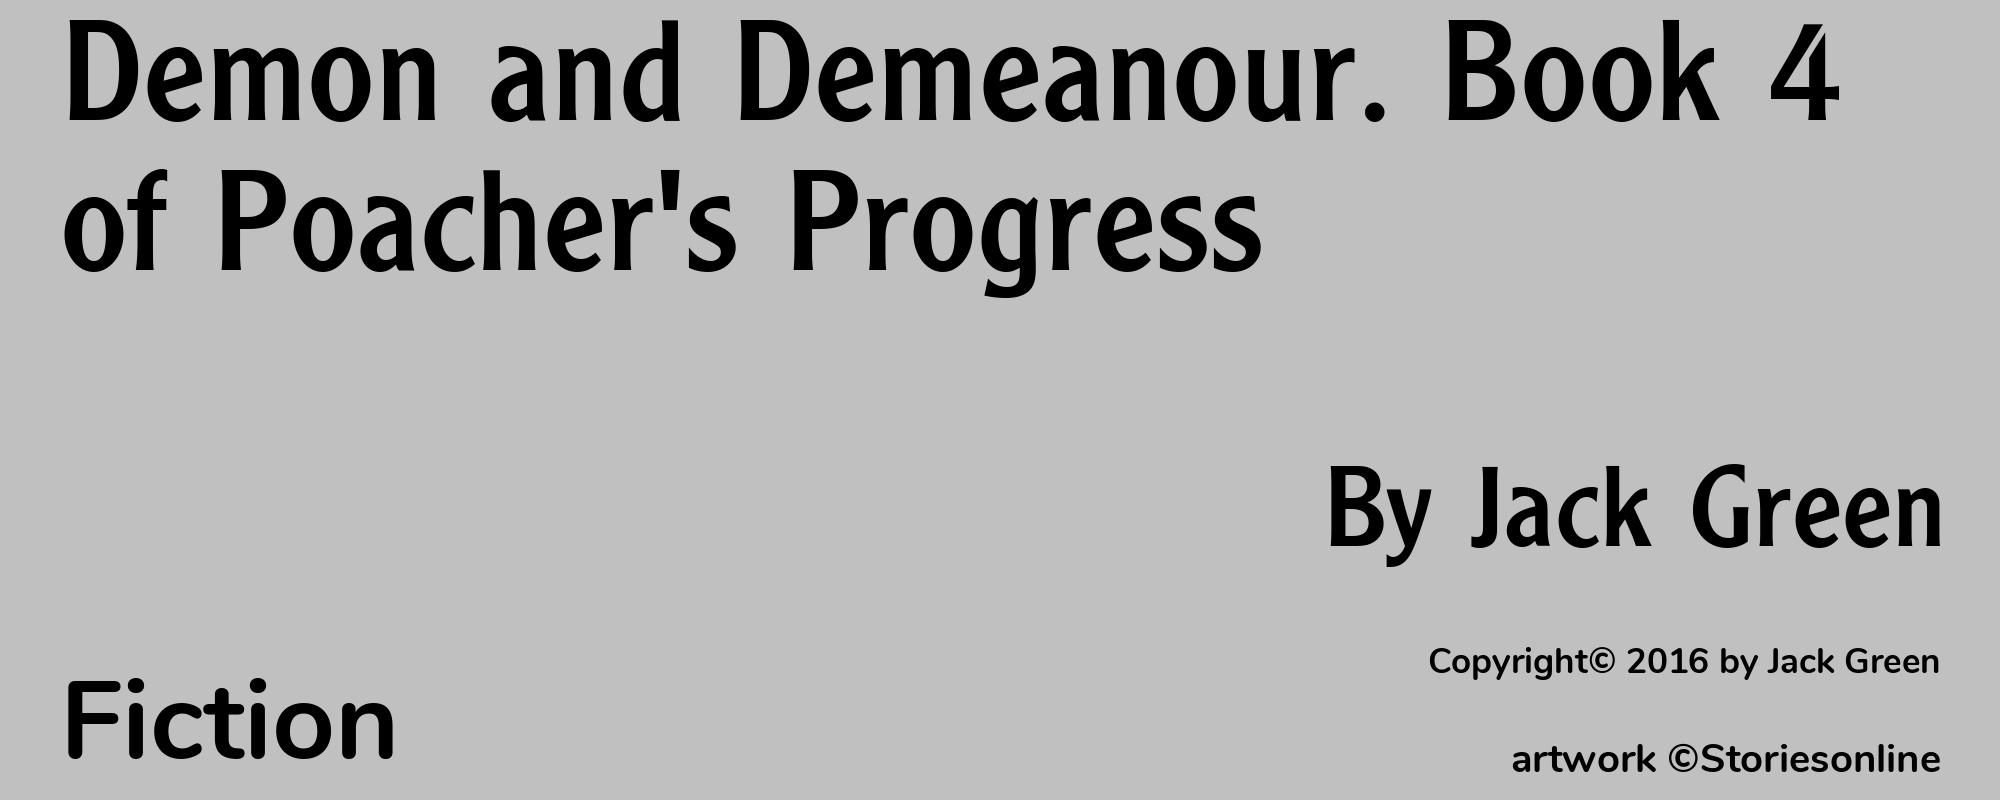 Demon and Demeanour. Book 4 of Poacher's Progress - Cover